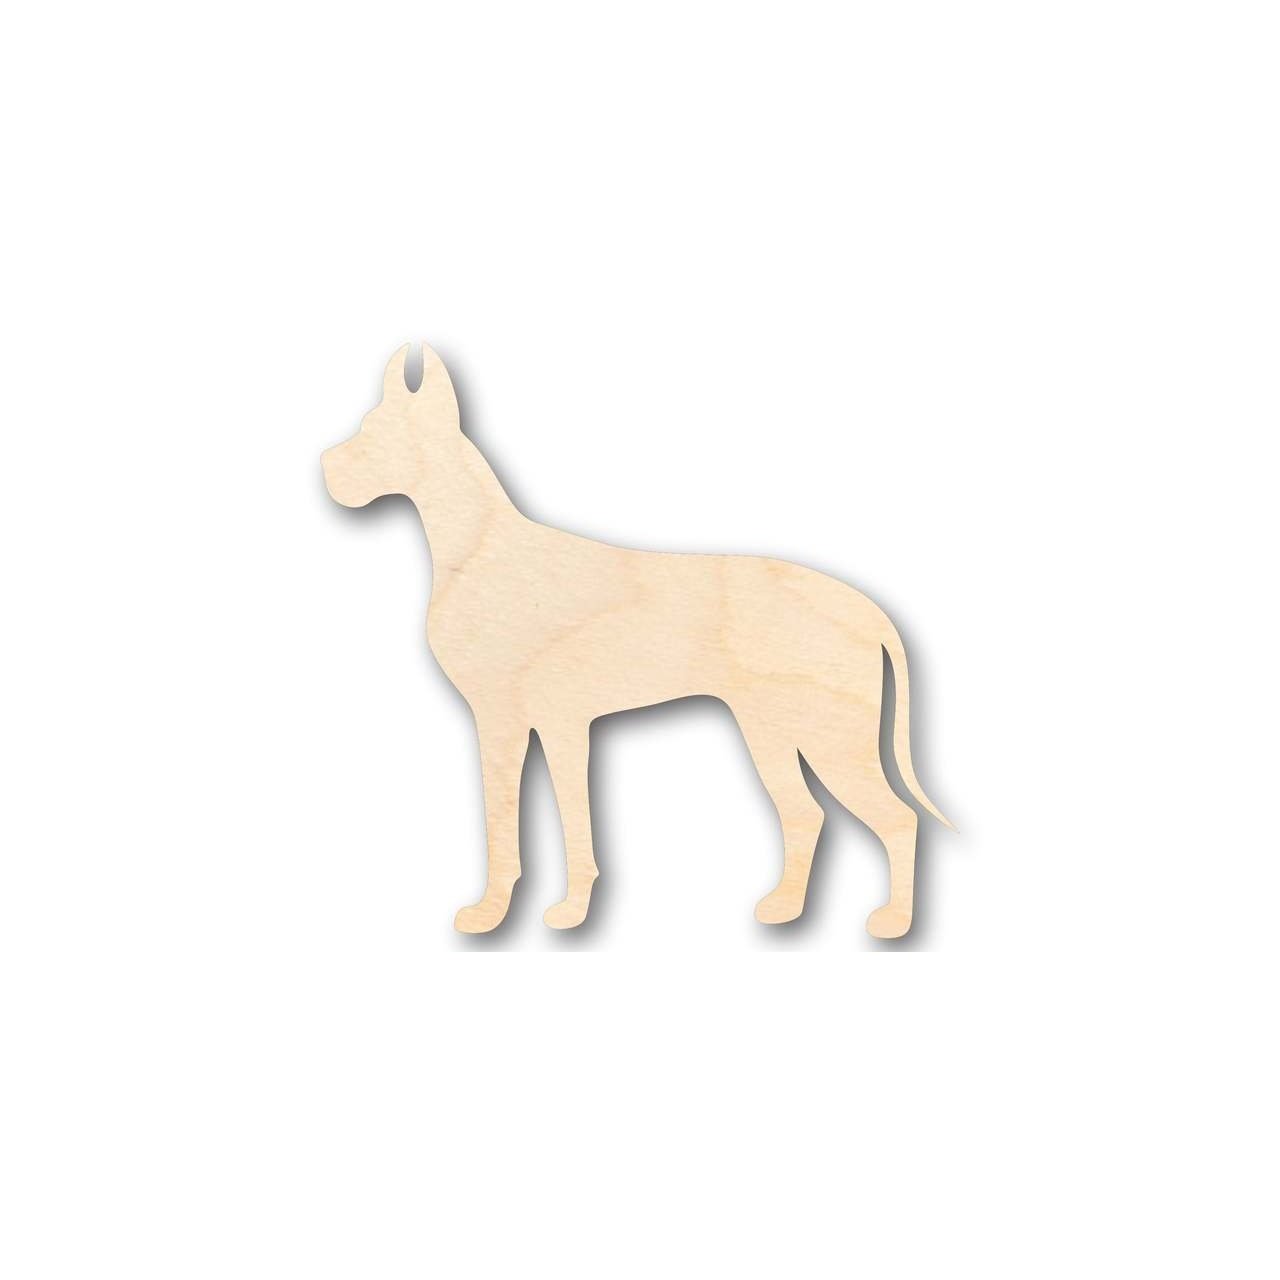 Unfinished Wooden Great Dane Dog Shape - Animal - Pet - Craft - up to 24